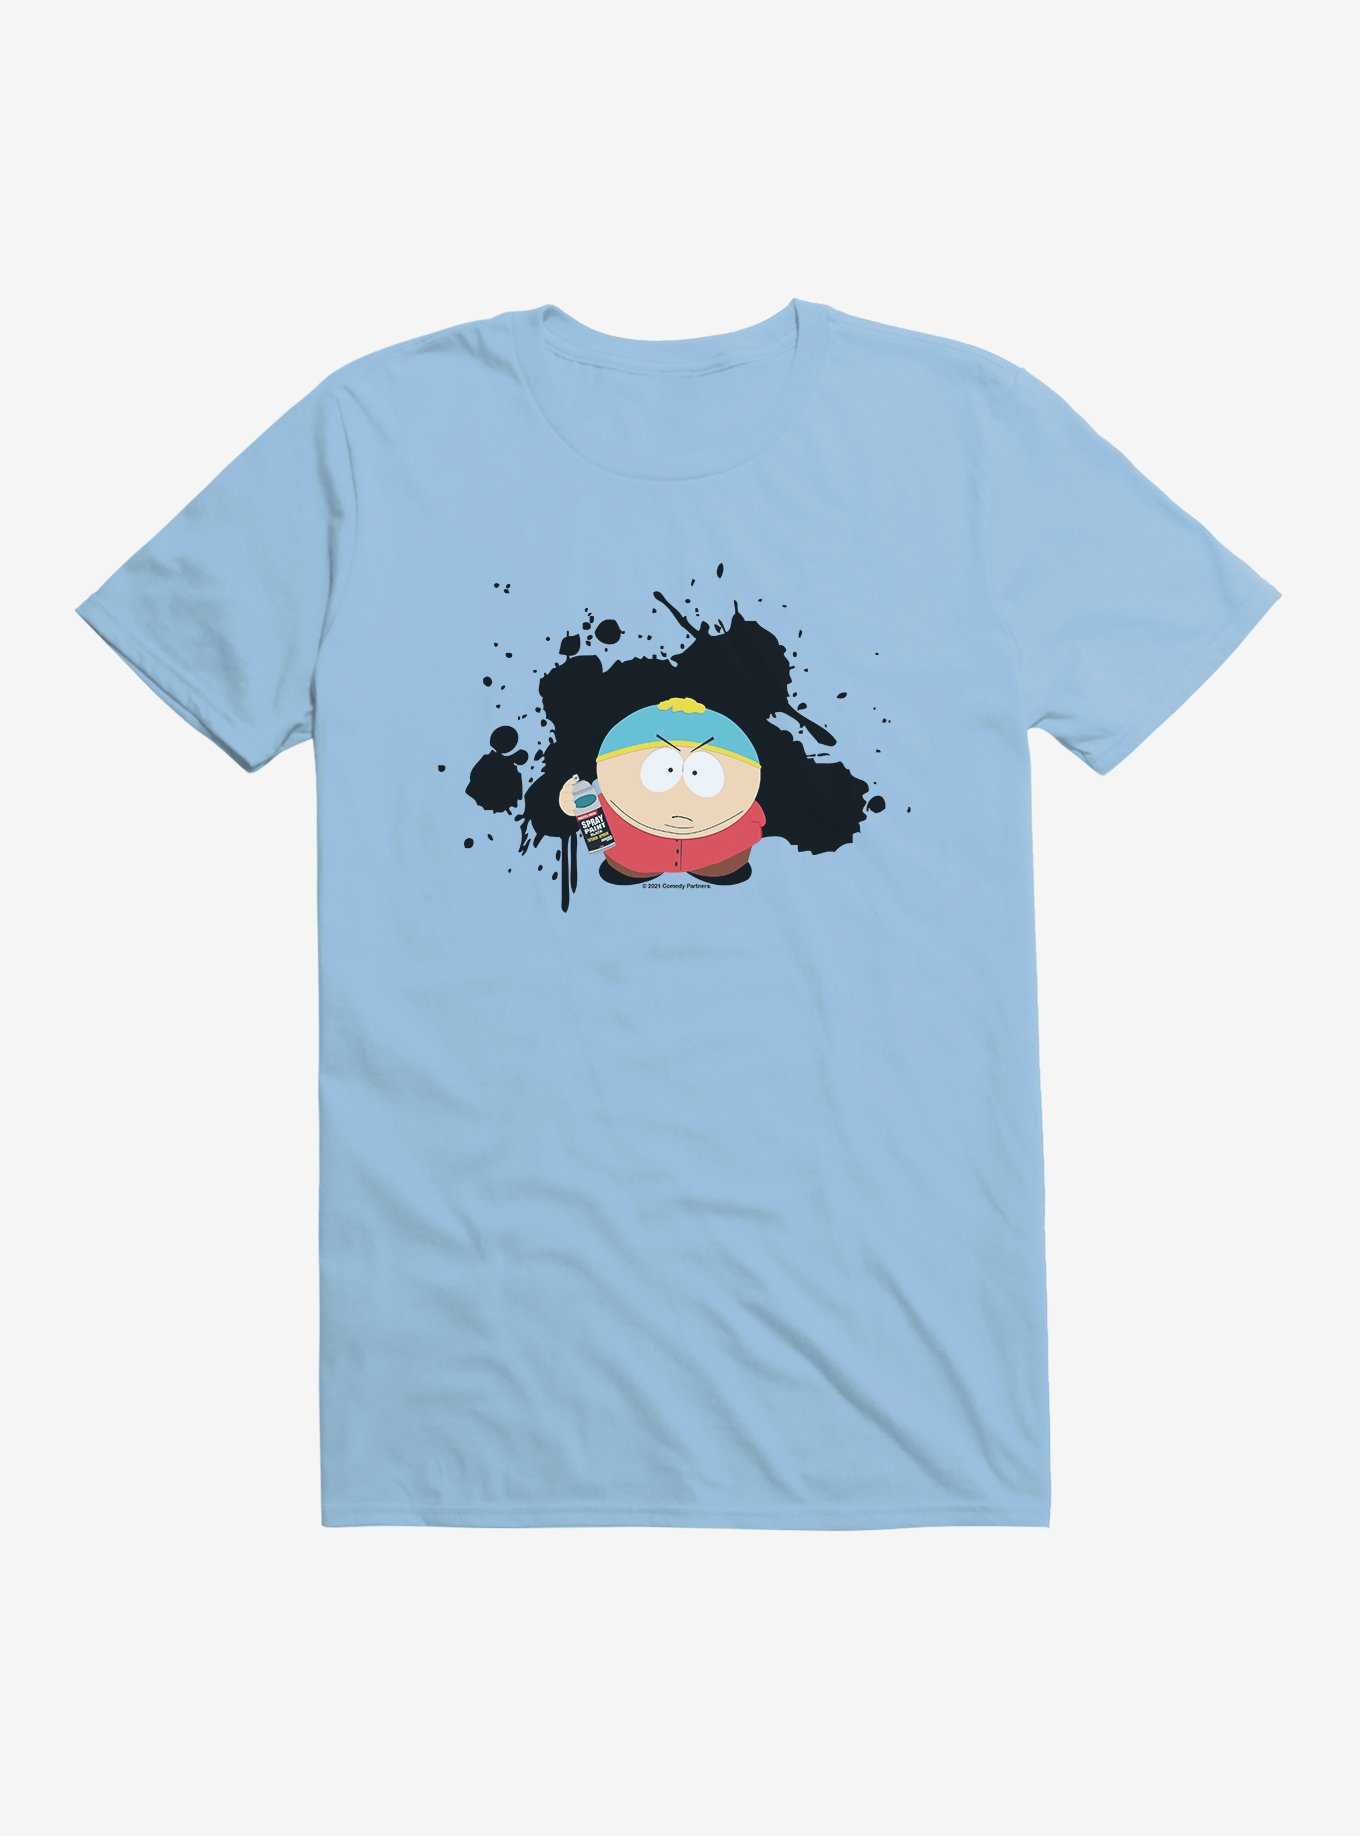 South Park Season Reference Cartman Spray Paint T-Shirt, , hi-res